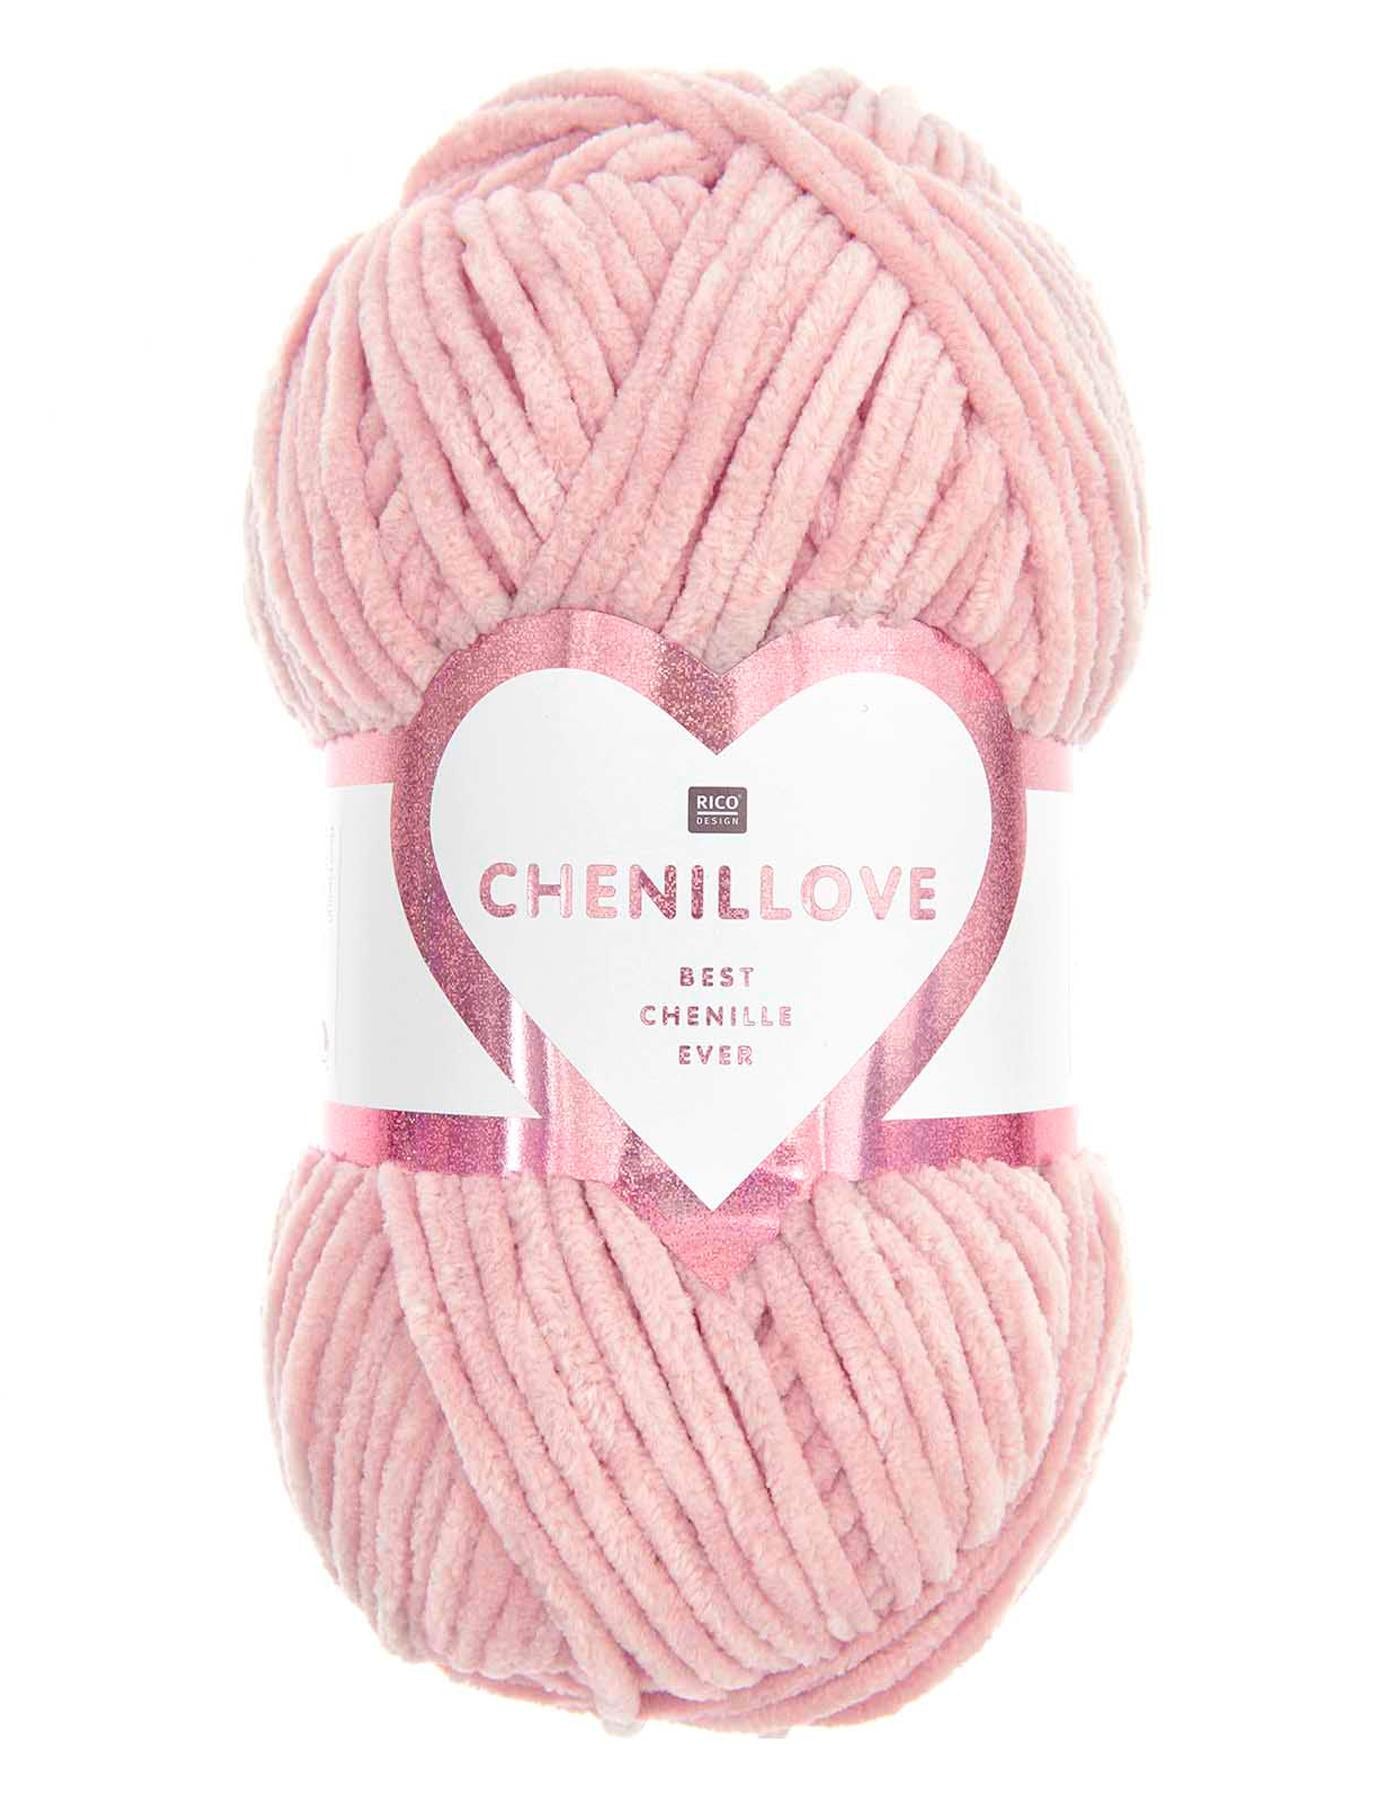 RICO Chenillove Mint (004) chenille yarn - 100g